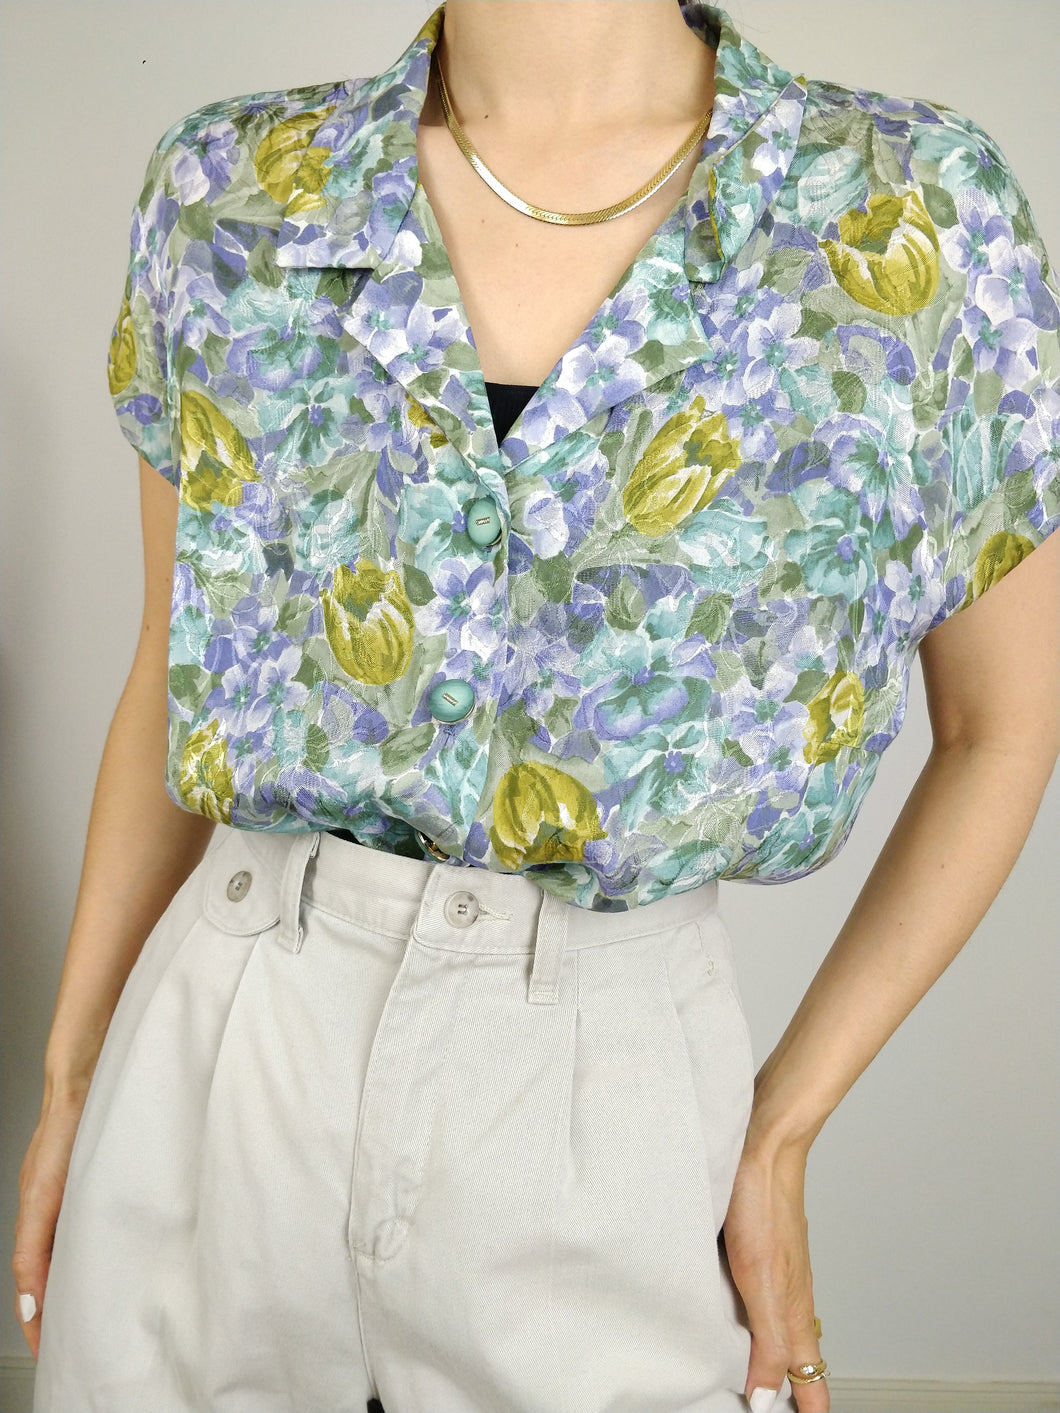 The Flower Romance | Vintage purple green floral flower print pattern blouse L